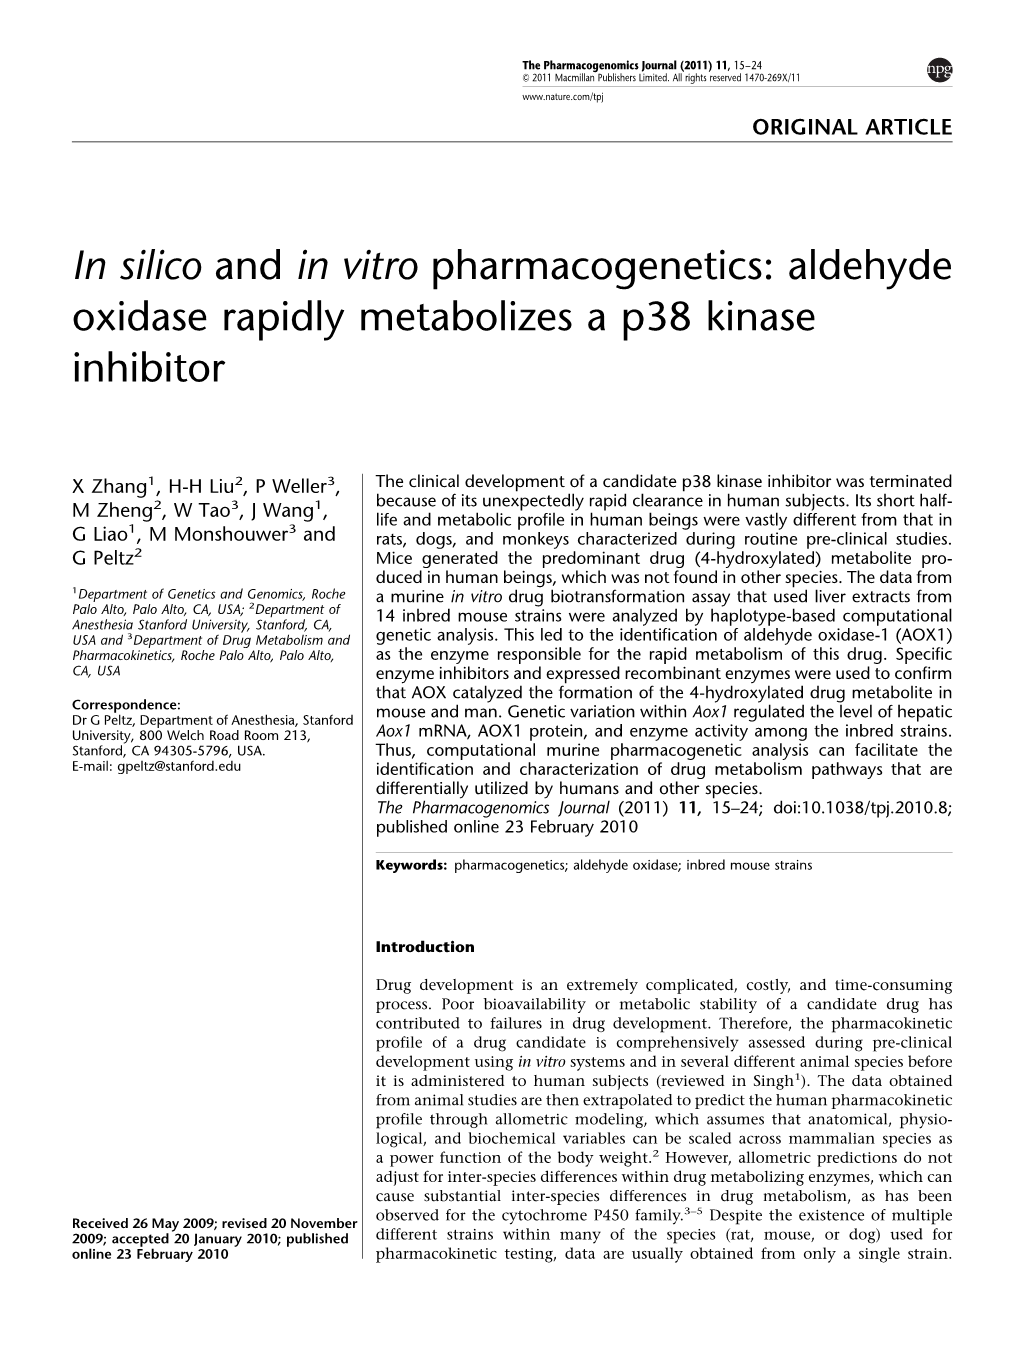 Aldehyde Oxidase Rapidly Metabolizes a P38 Kinase Inhibitor